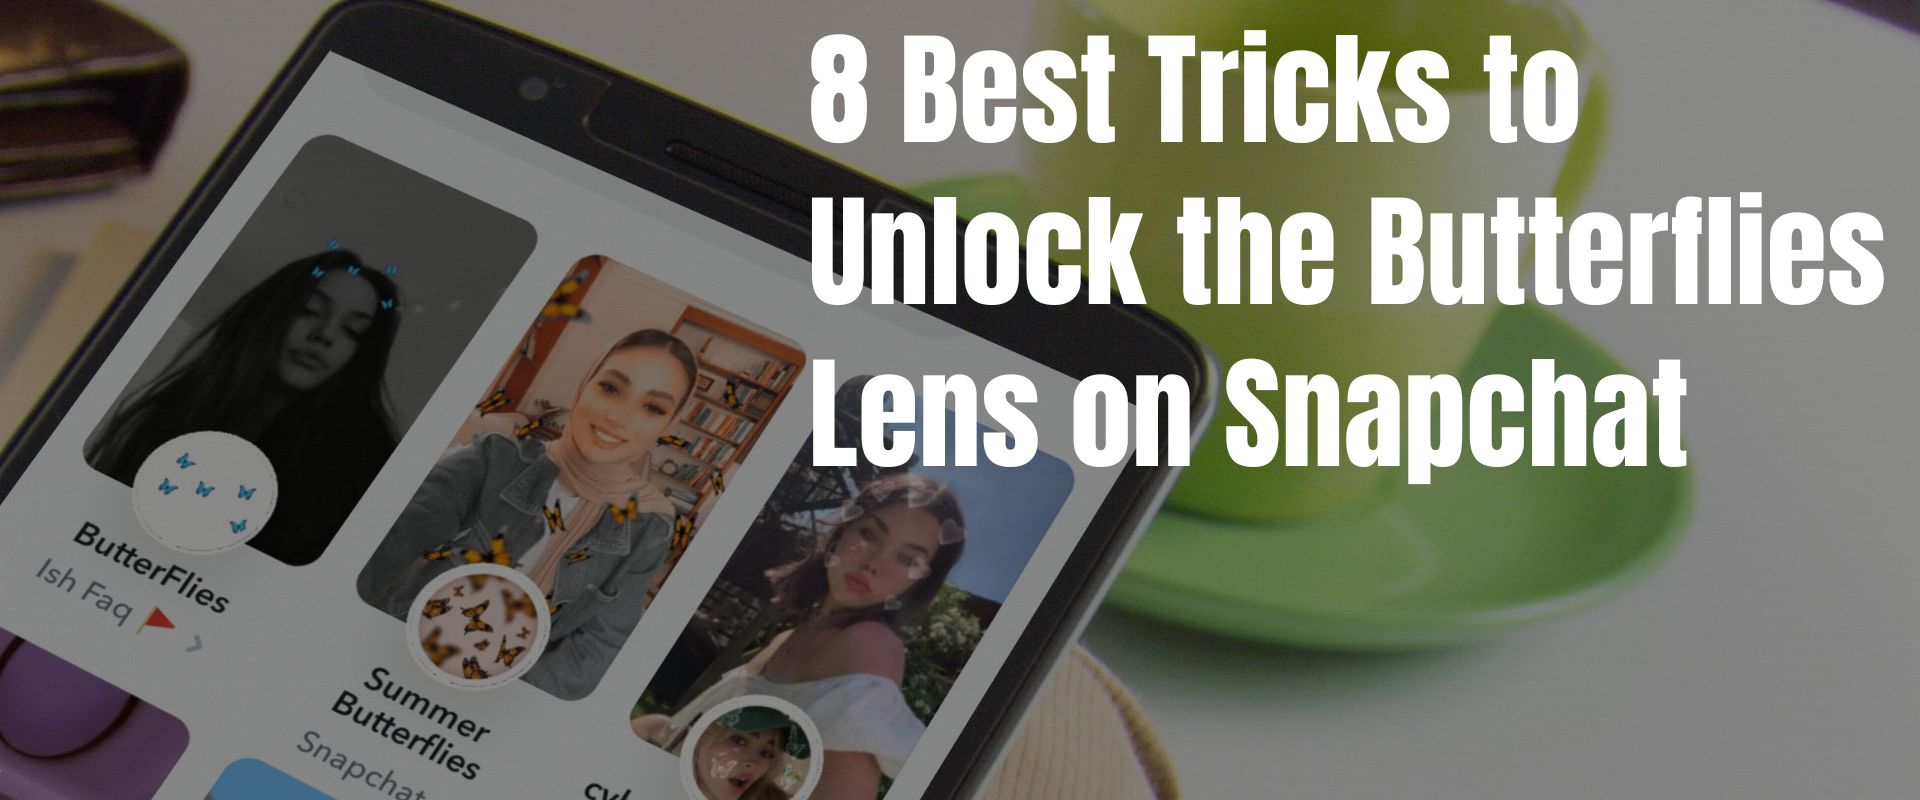 8 Best Tricks to Unlock the Butterflies Lens on Snapchat